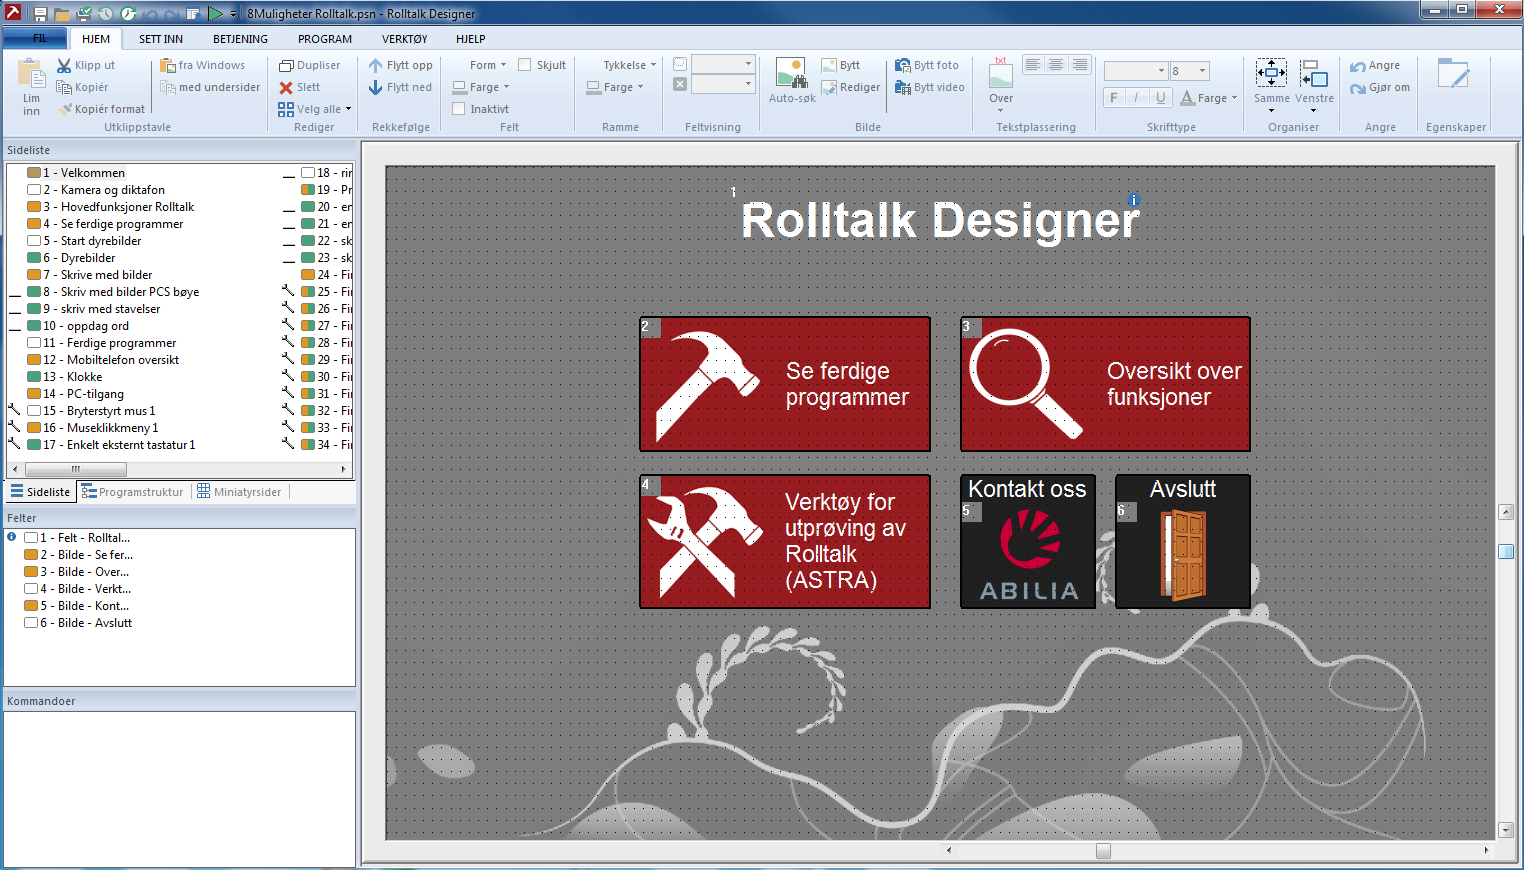 Rolltalk Designer Verktøyprogrammet Rolltalk Designer sitt hovedvindu ser slik ut med brukerprogrammet Muligheter Rolltalk åpent. Et brukerprogram består av sider, felter og kommandoer.